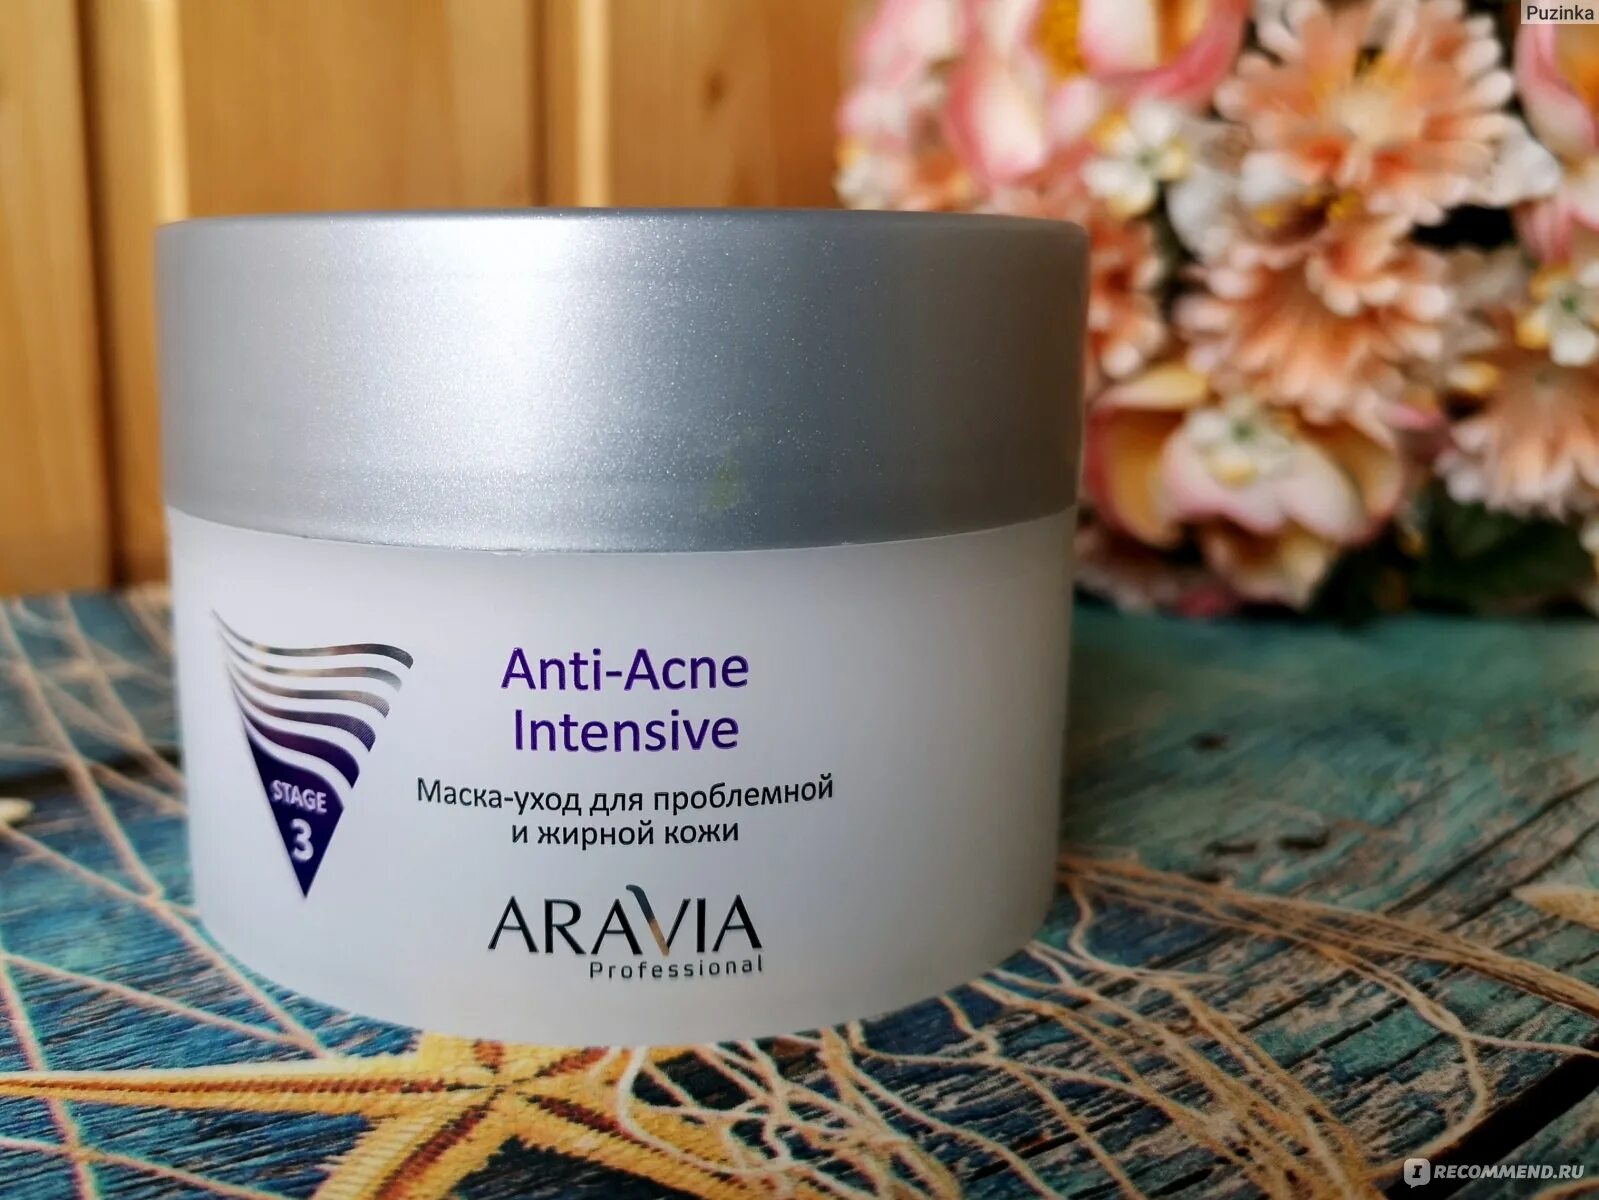 Маска Aravia Anti-acne. Anti acne Intensive Aravia. Aravia professional Anti-acne Intensive. Aravia маска для проблемной кожи. Маски для жирной и проблемной